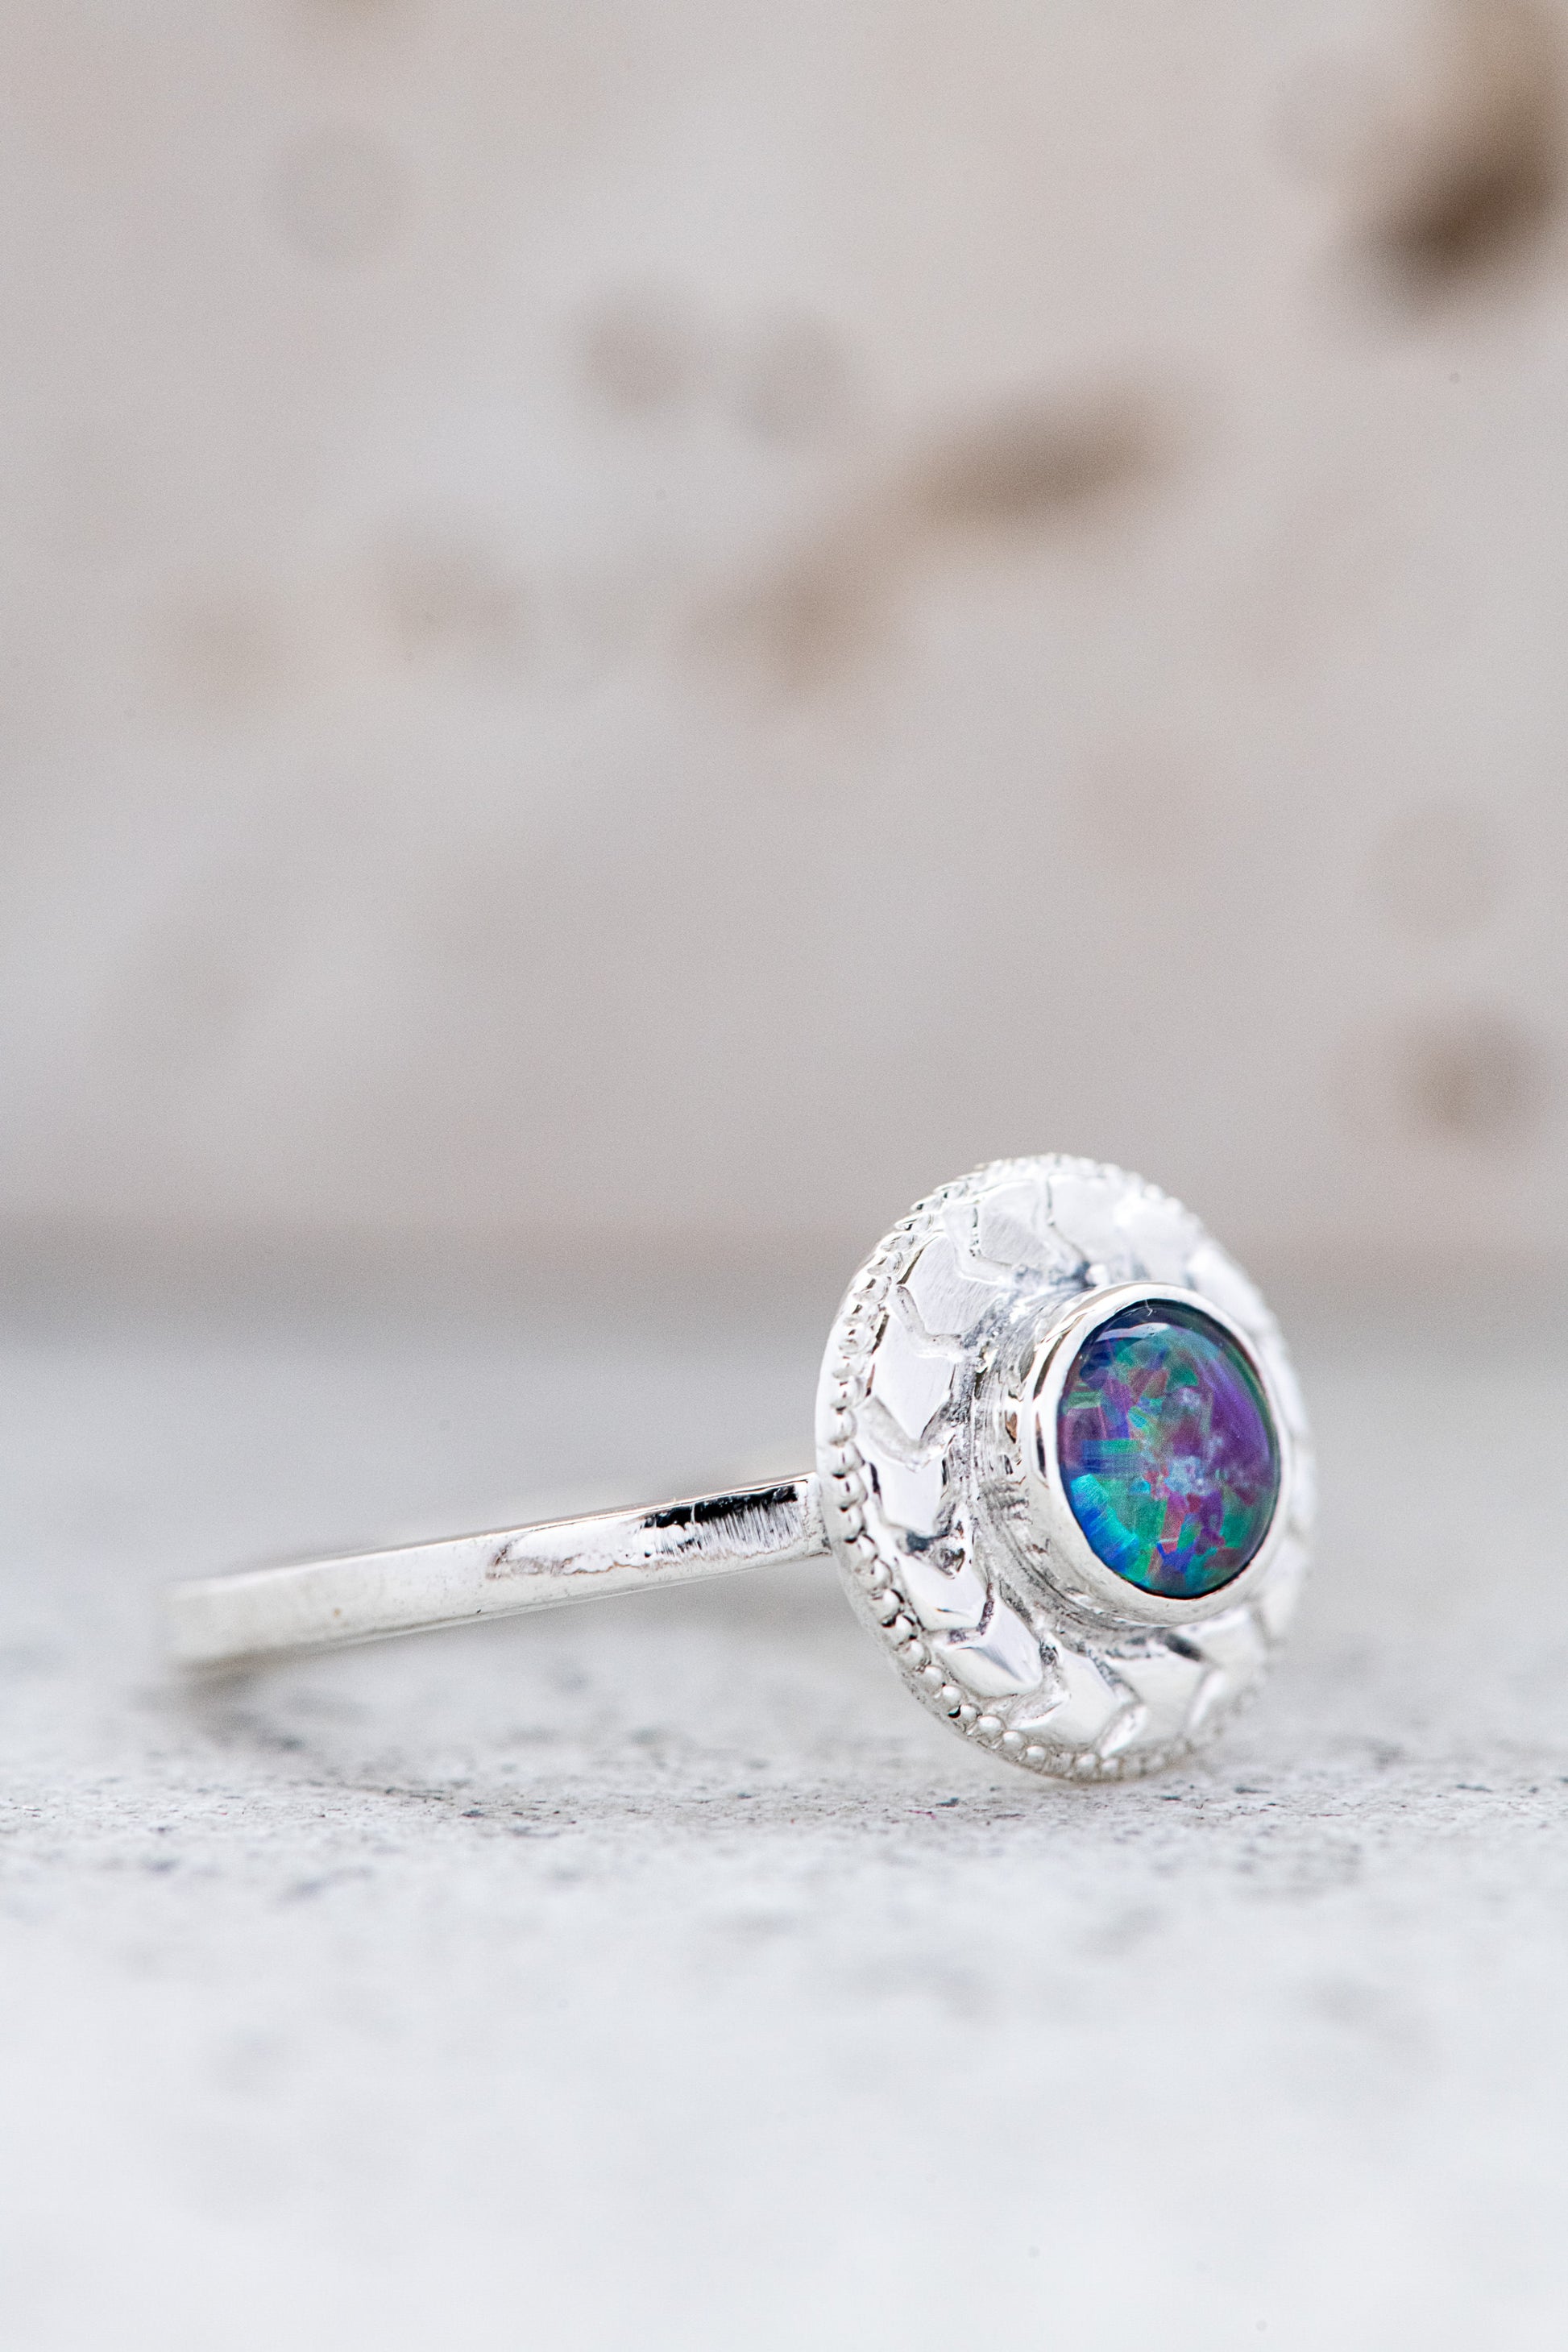 A handmade Australian Fire Opal Ring in 925 Sterling Silver with an opal stone.